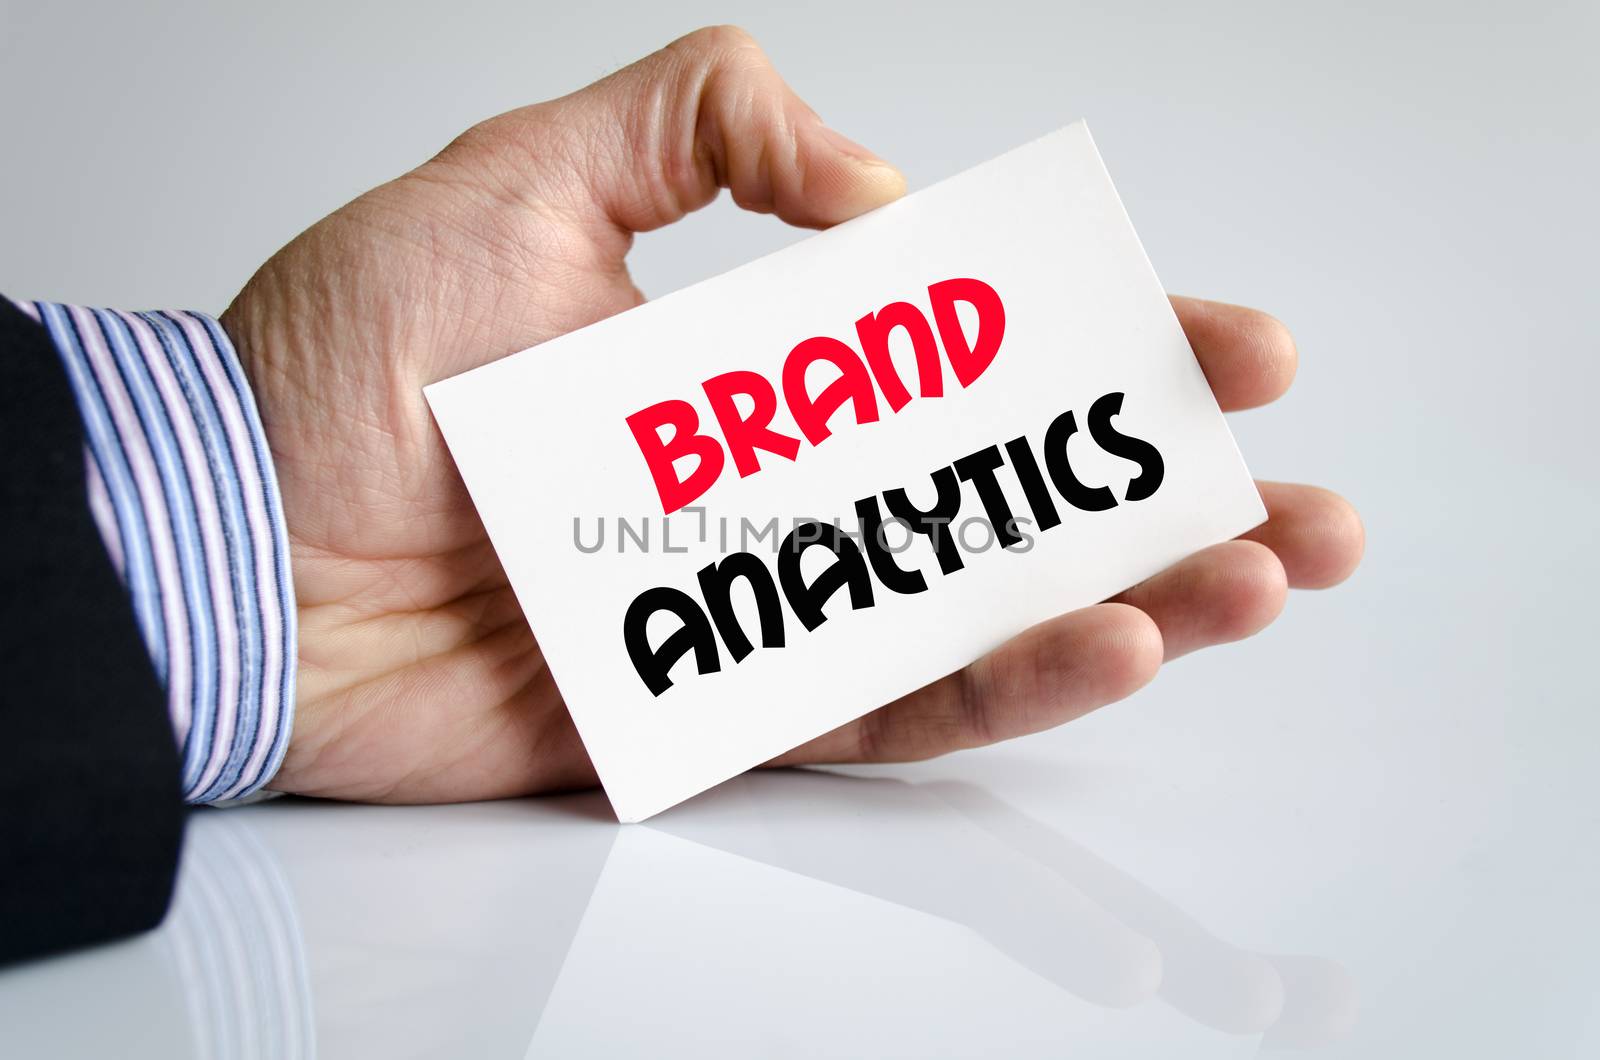 Brand analytics text concept by eenevski